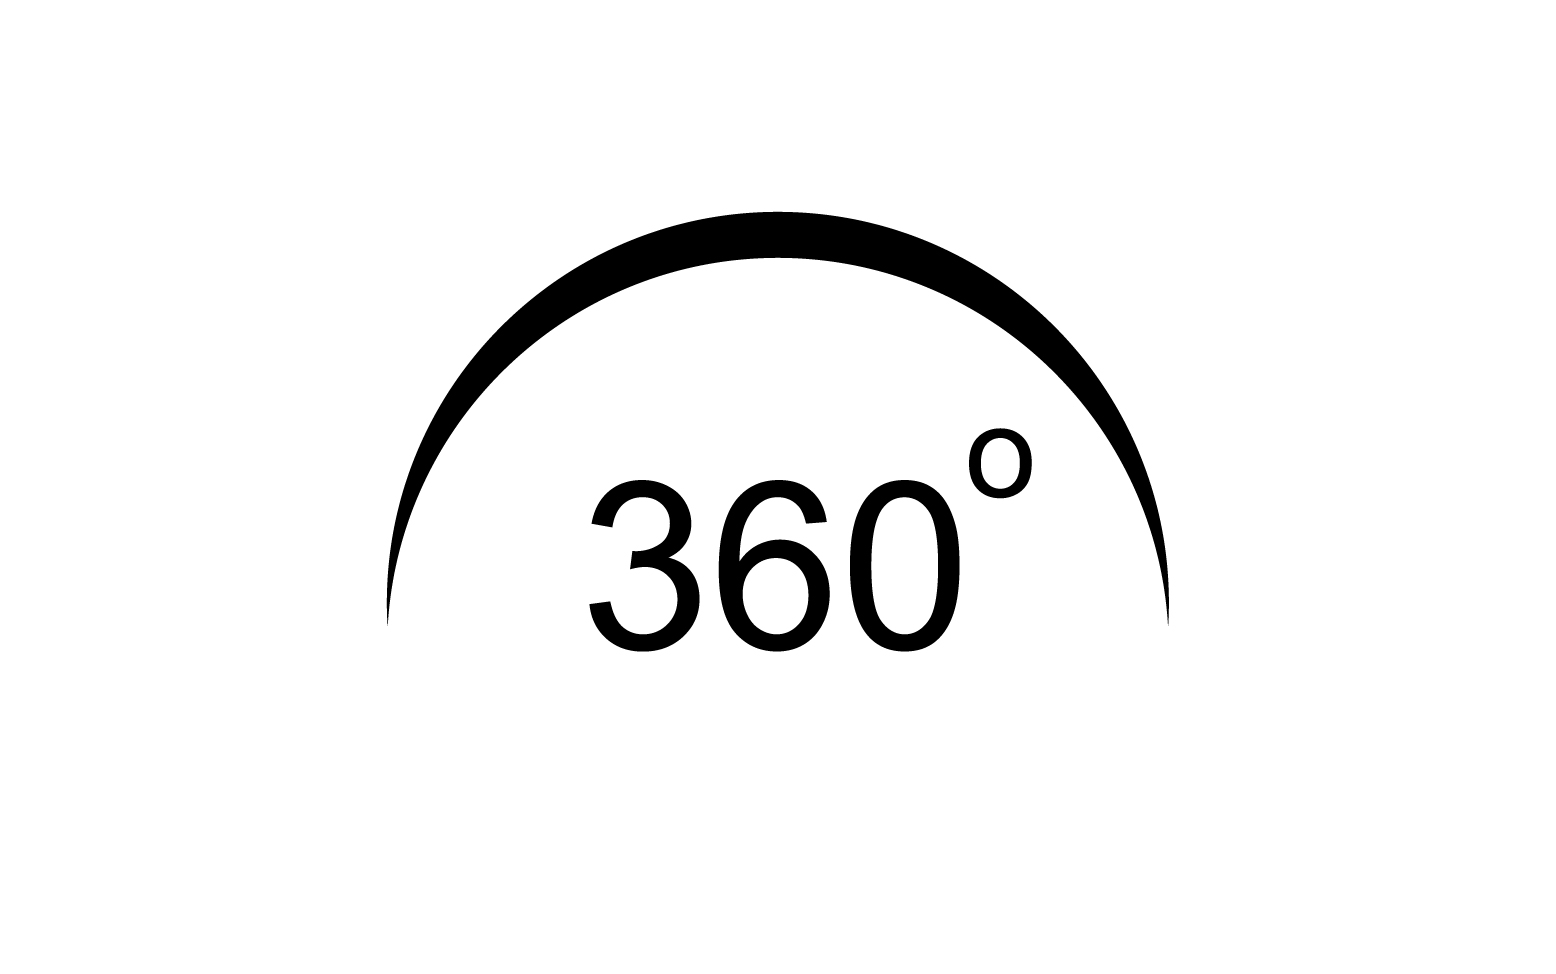 360 degree angle rotation icon symbol logo version v52